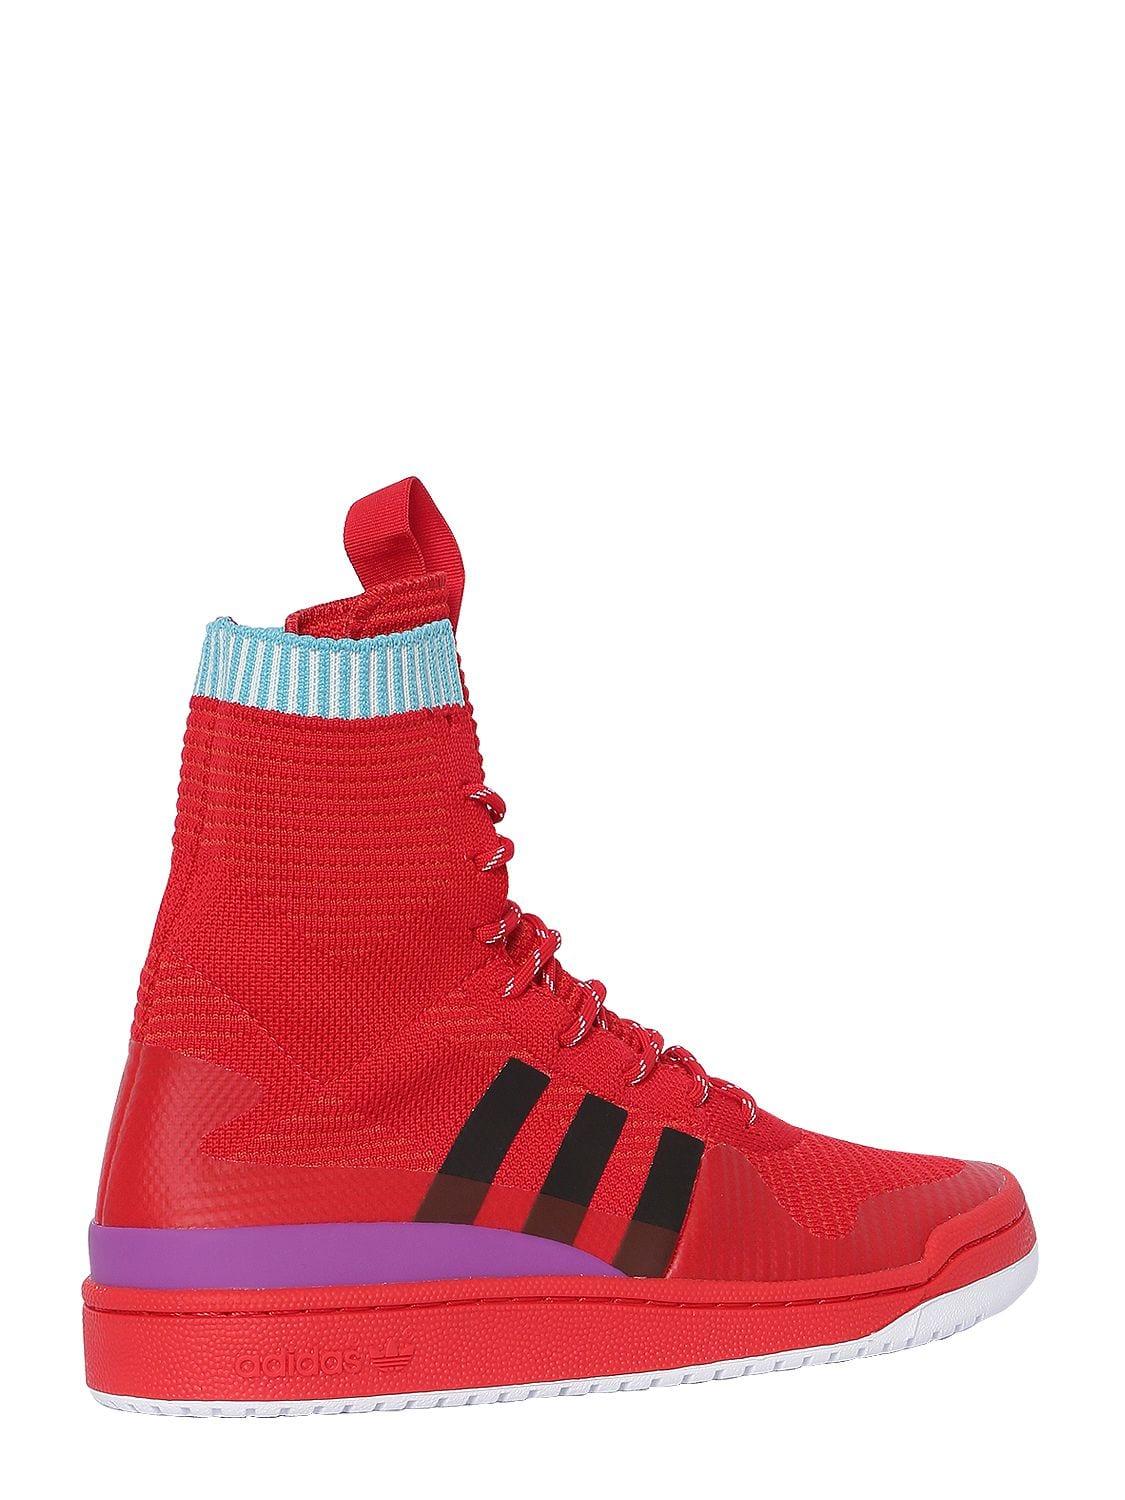 adidas Originals Forum Adventure High Top Sneakers in Red for Men | Lyst